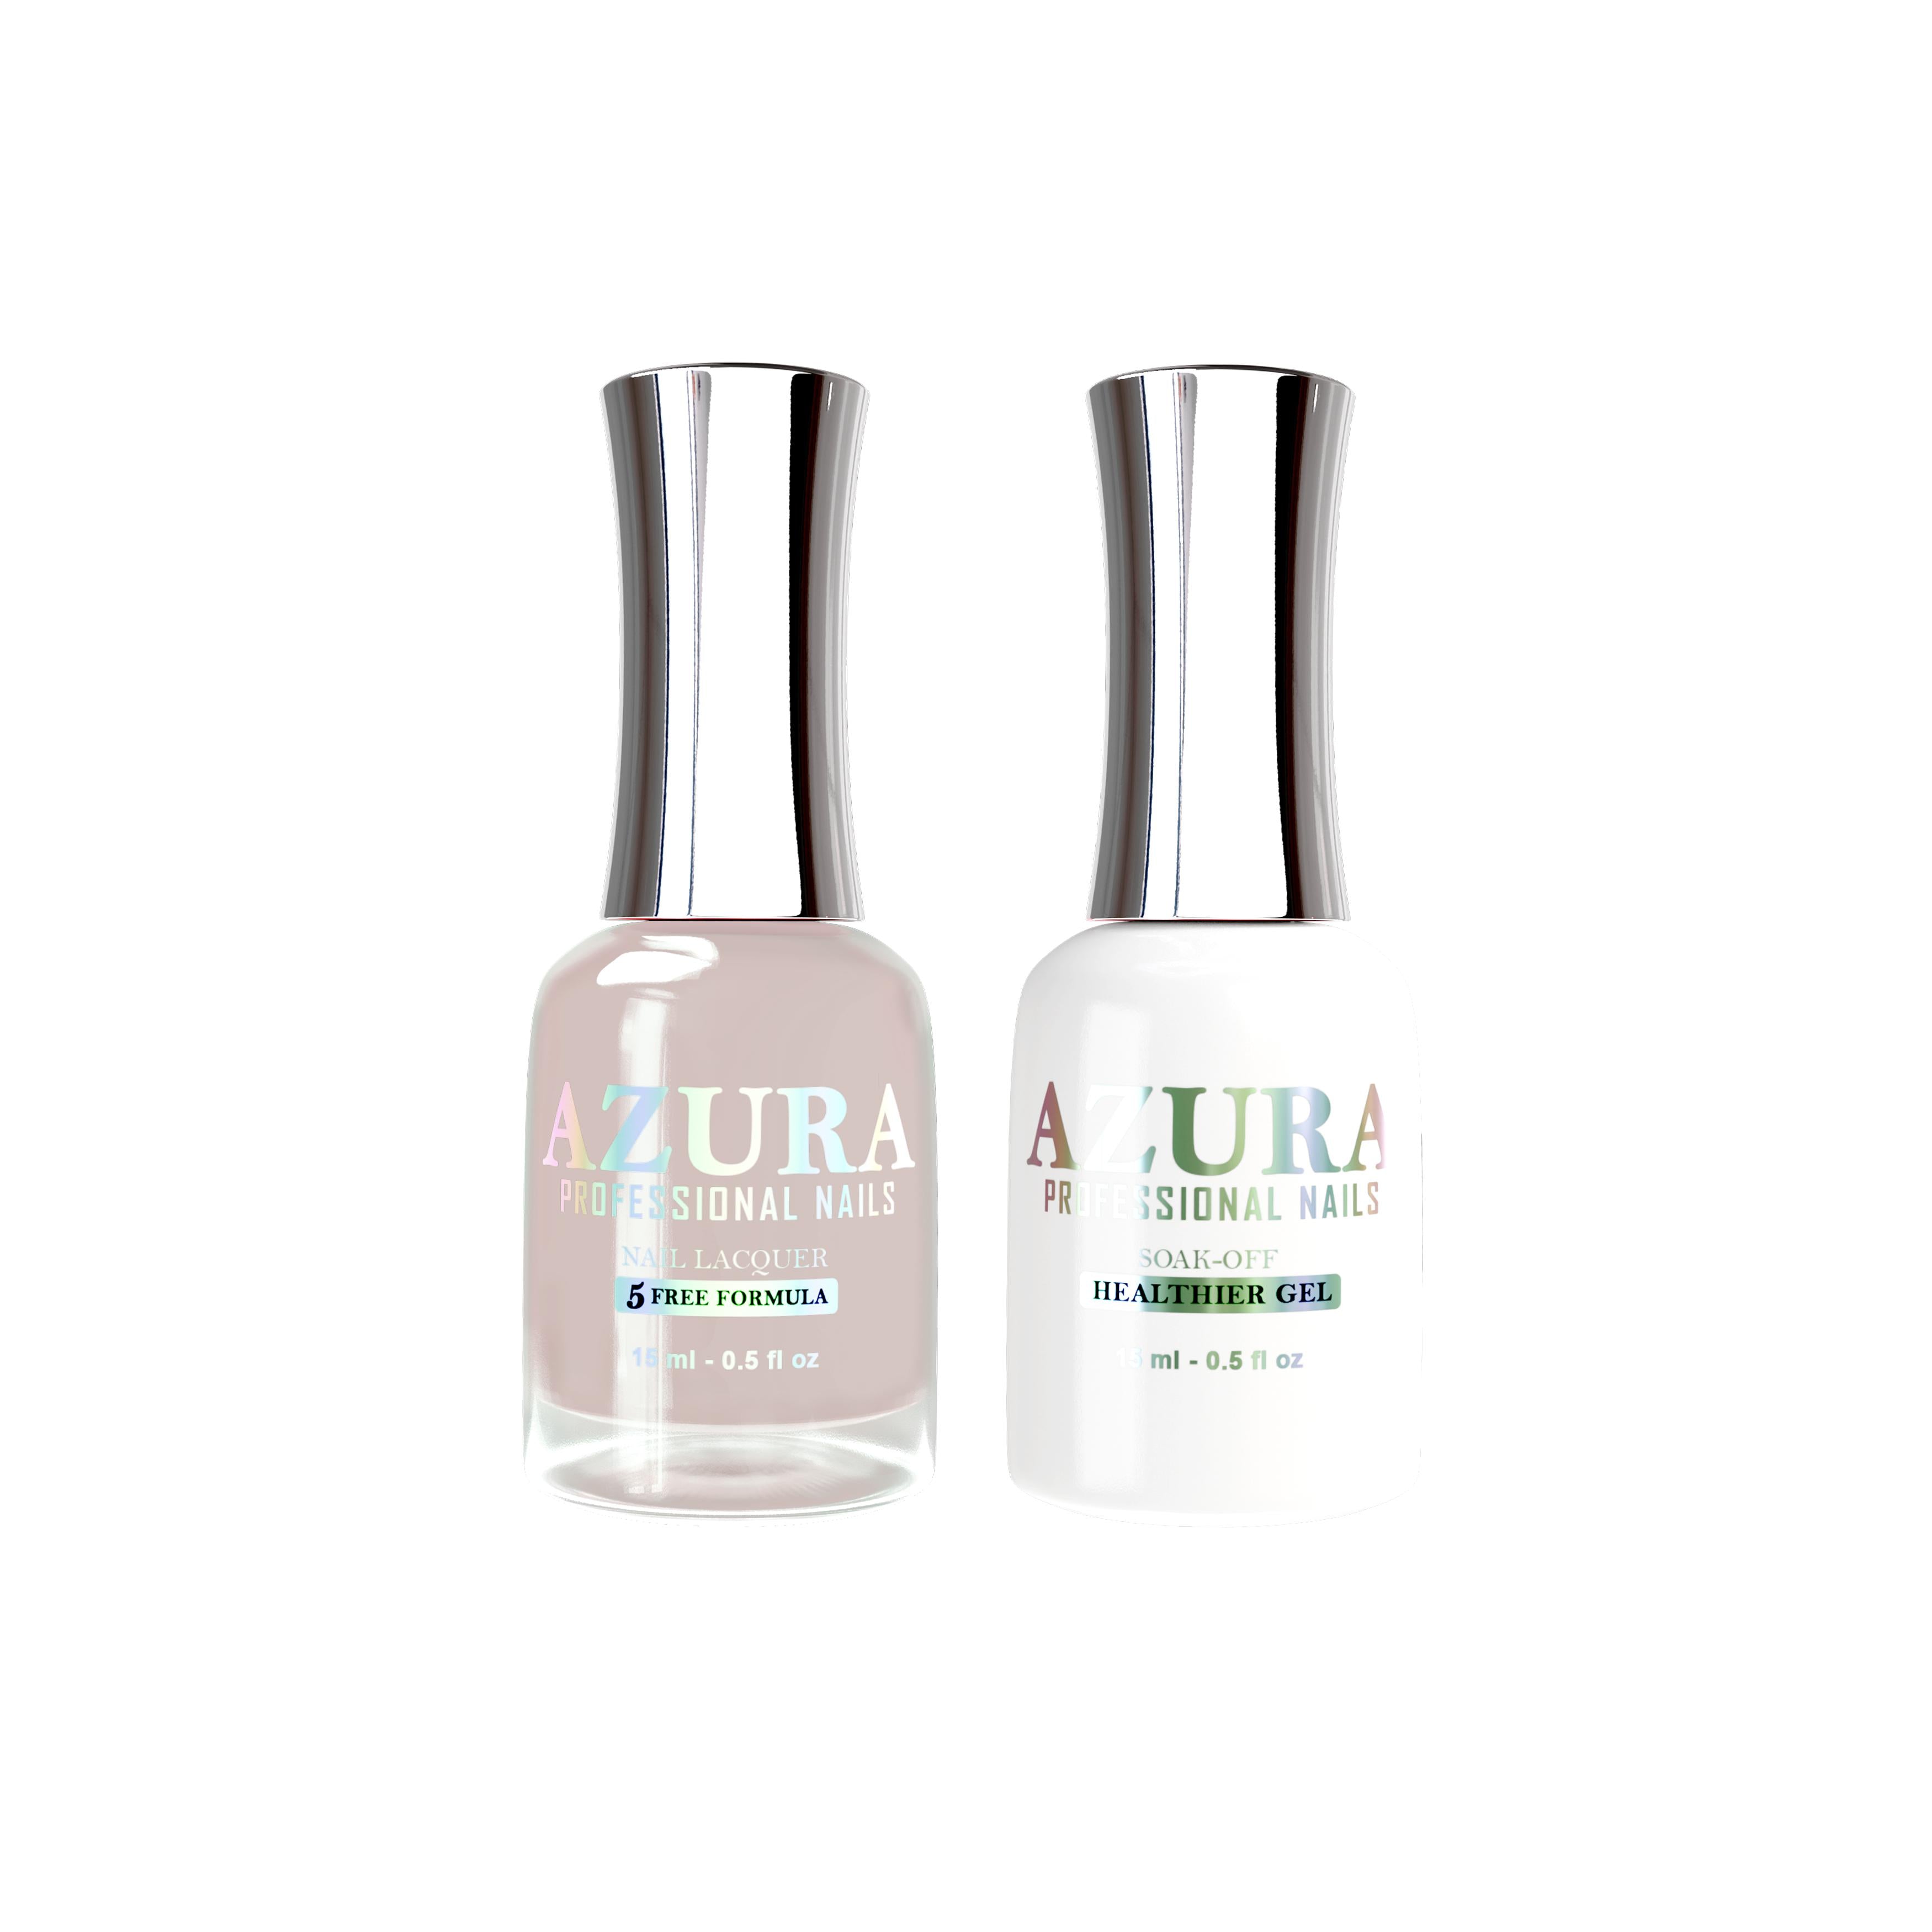 AZURA Gel Duo (Gel & Lacquer) - See Thru Pink - 046-AZURA- Nail Supply American Gel Polish - Phuong Ni